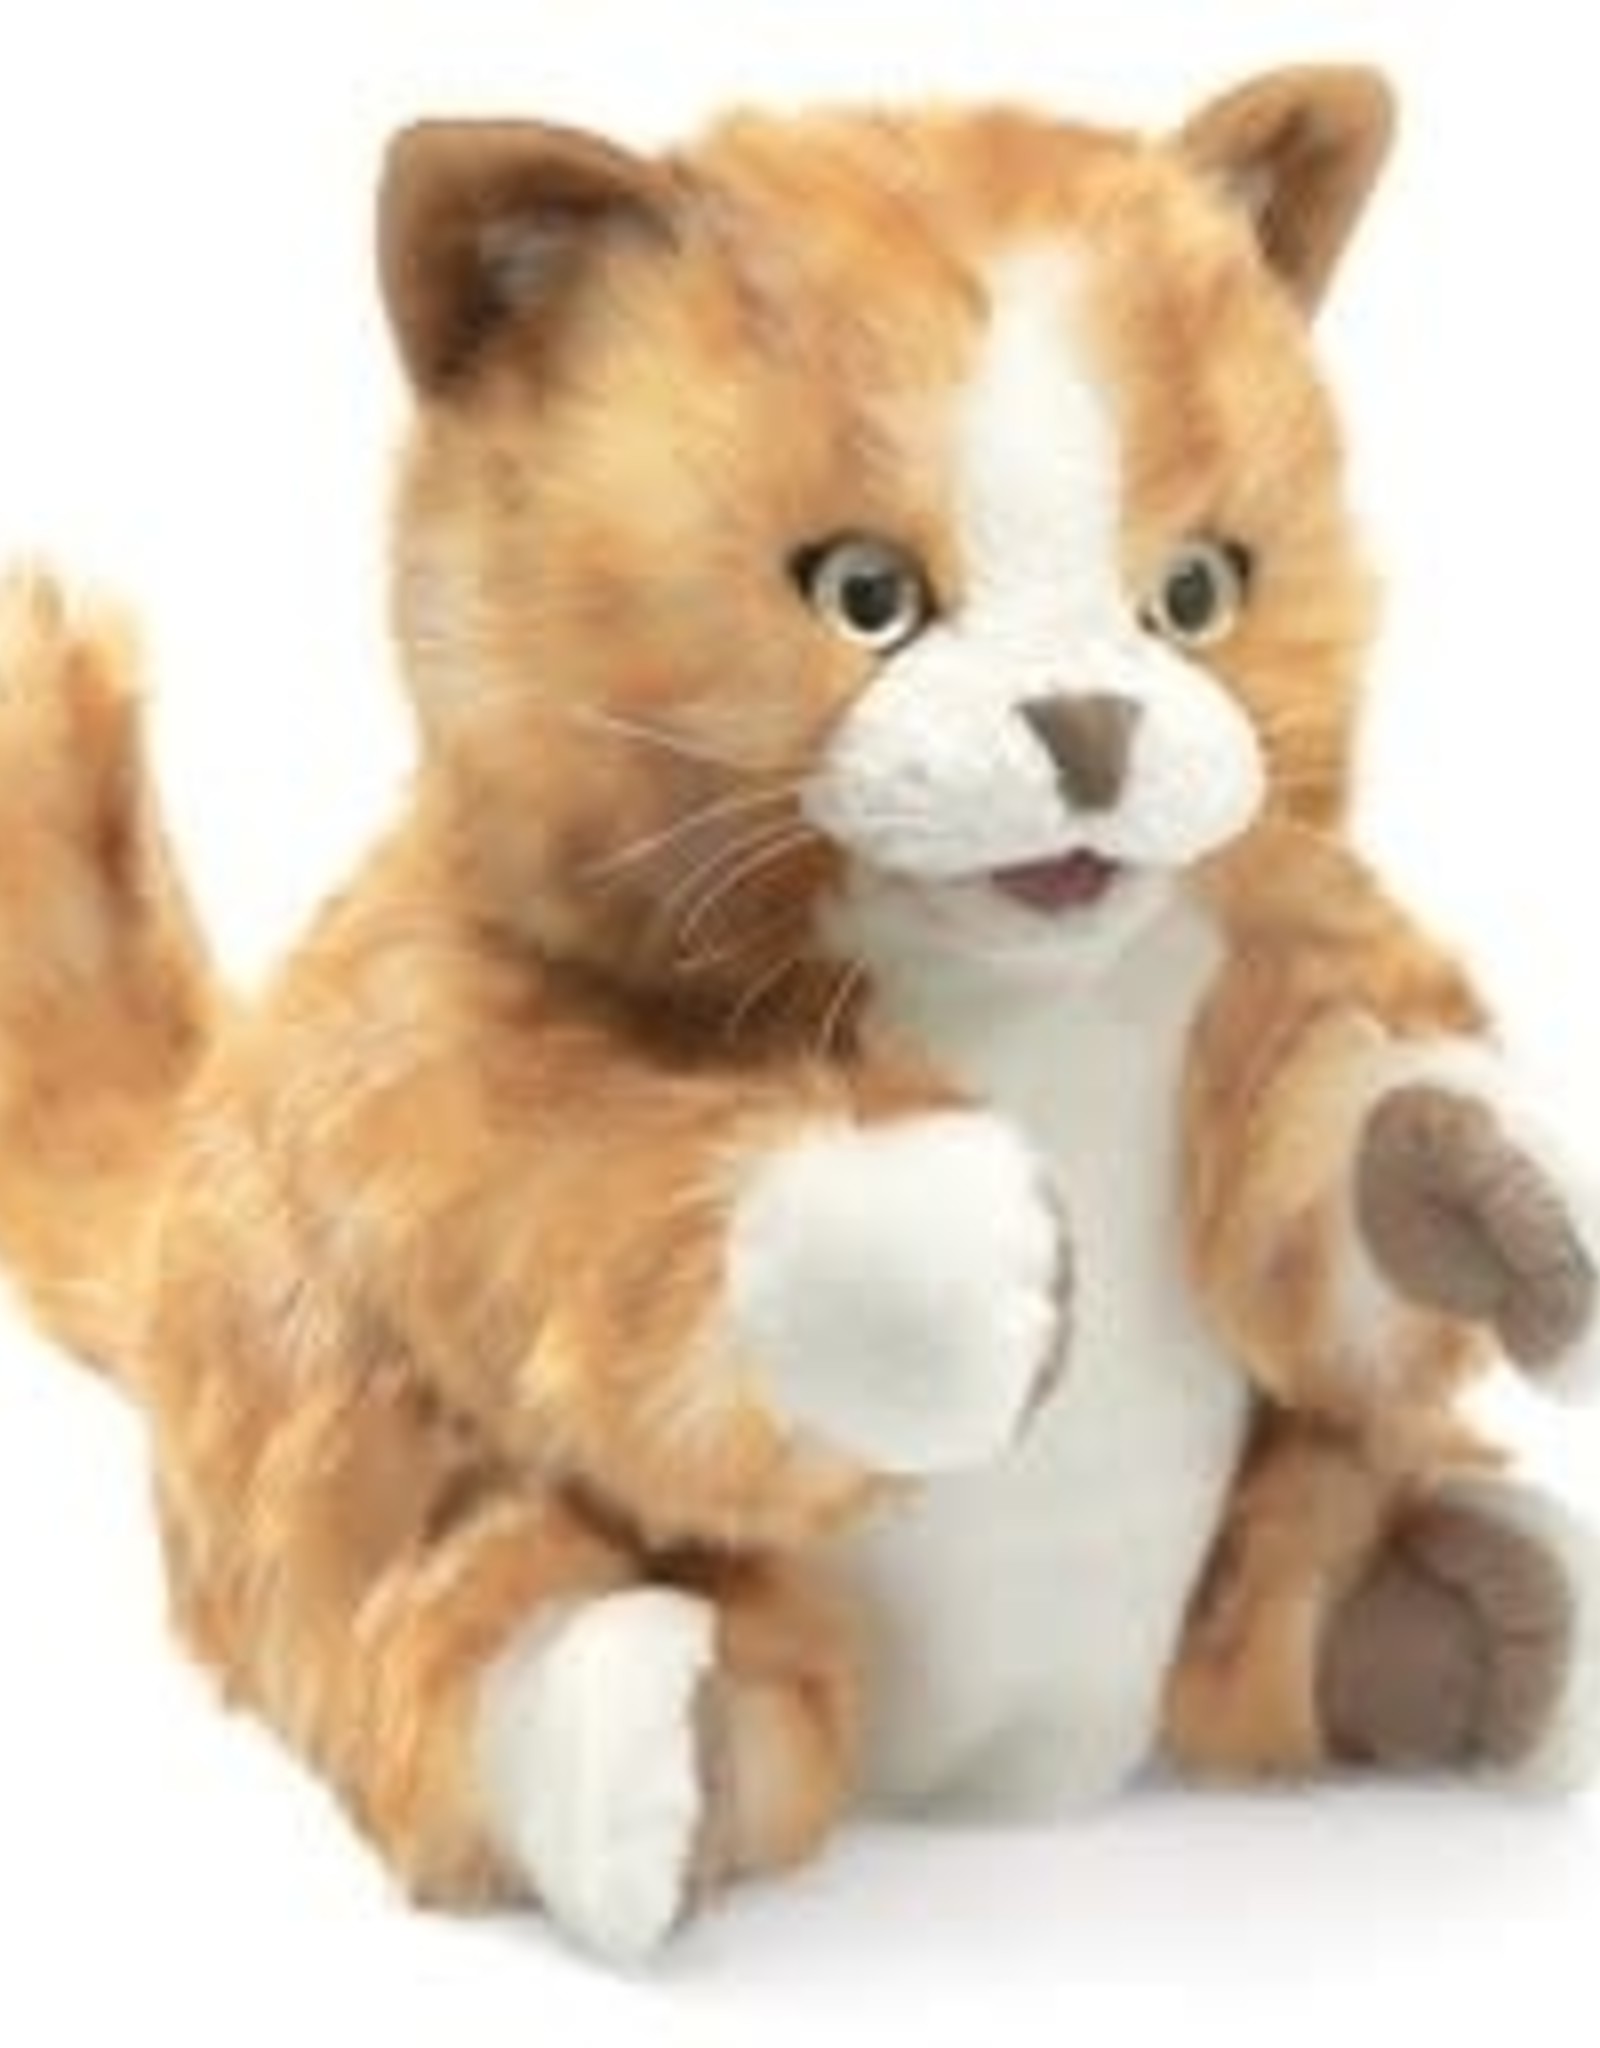 Folkmanis Orange Tabby Kitten Hand Puppet